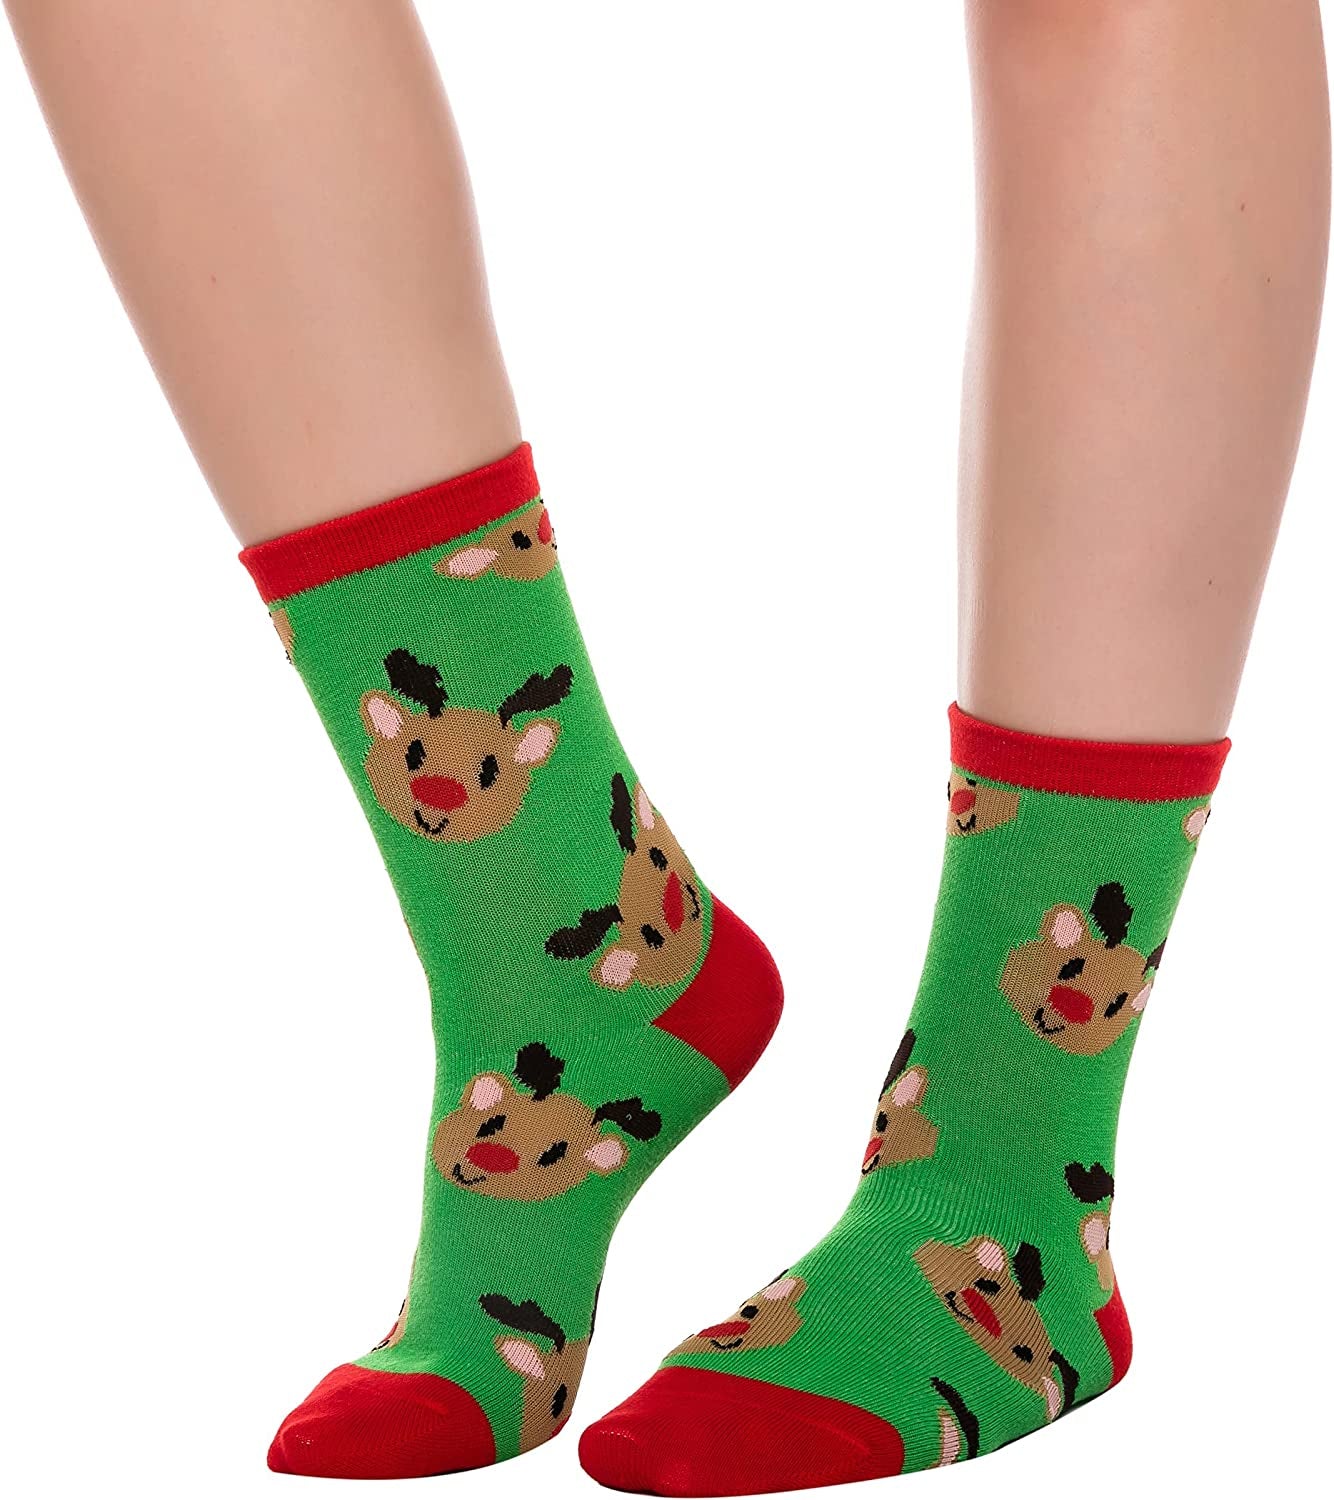 JOYIN 12 Pairs Christmas Cotton Socks, Holiday Warm Soft Socks for Winter Christmas, Holiday or Birthday Gift